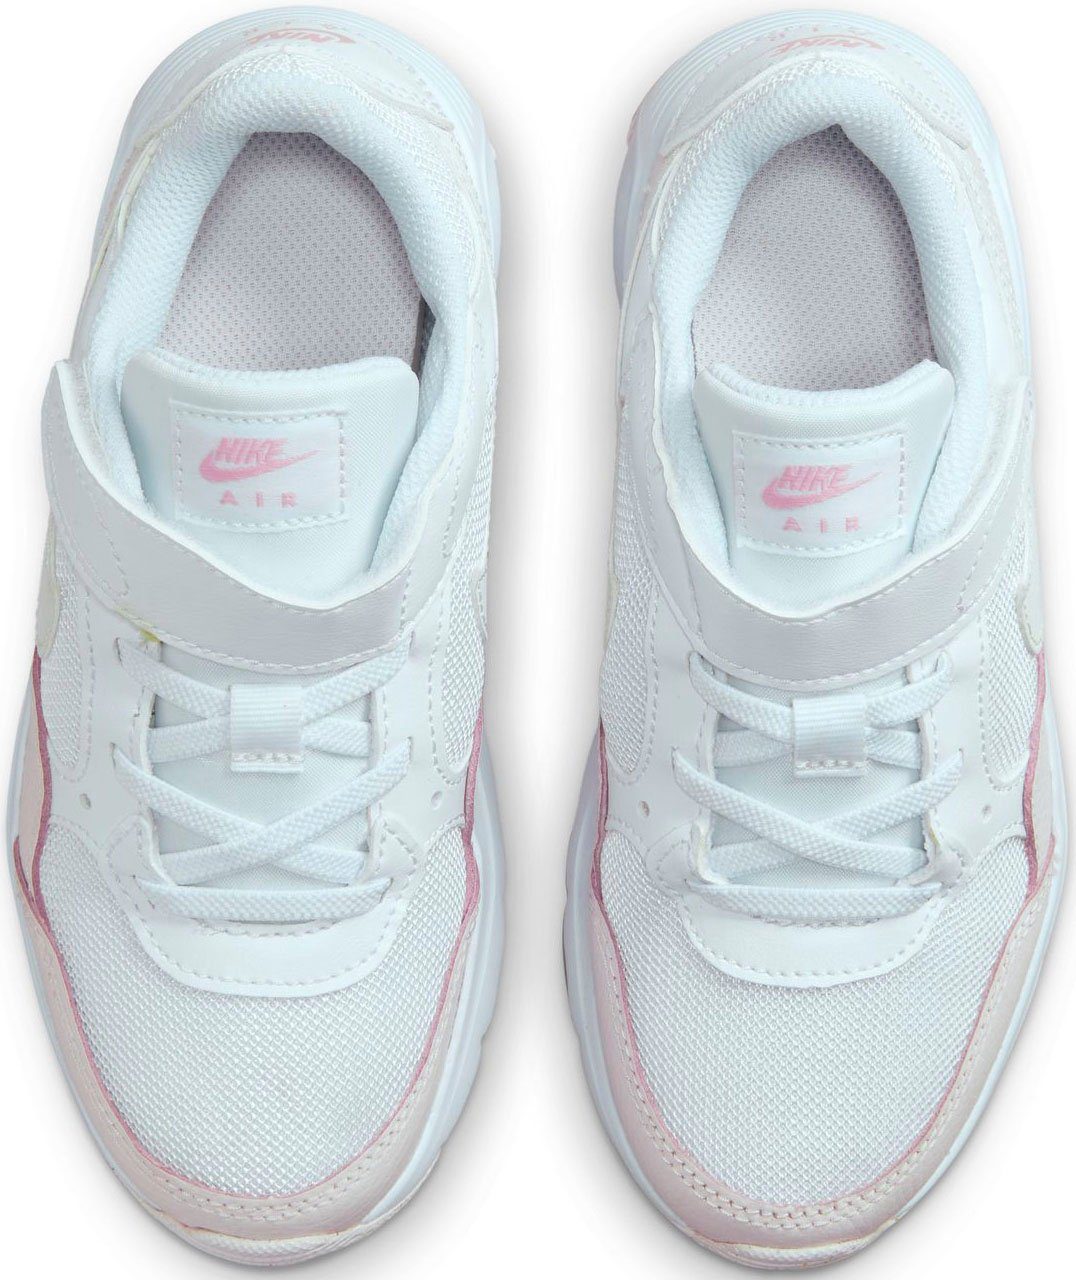 white/summit AIR (PS) SC Nike Sportswear MAX Sneaker